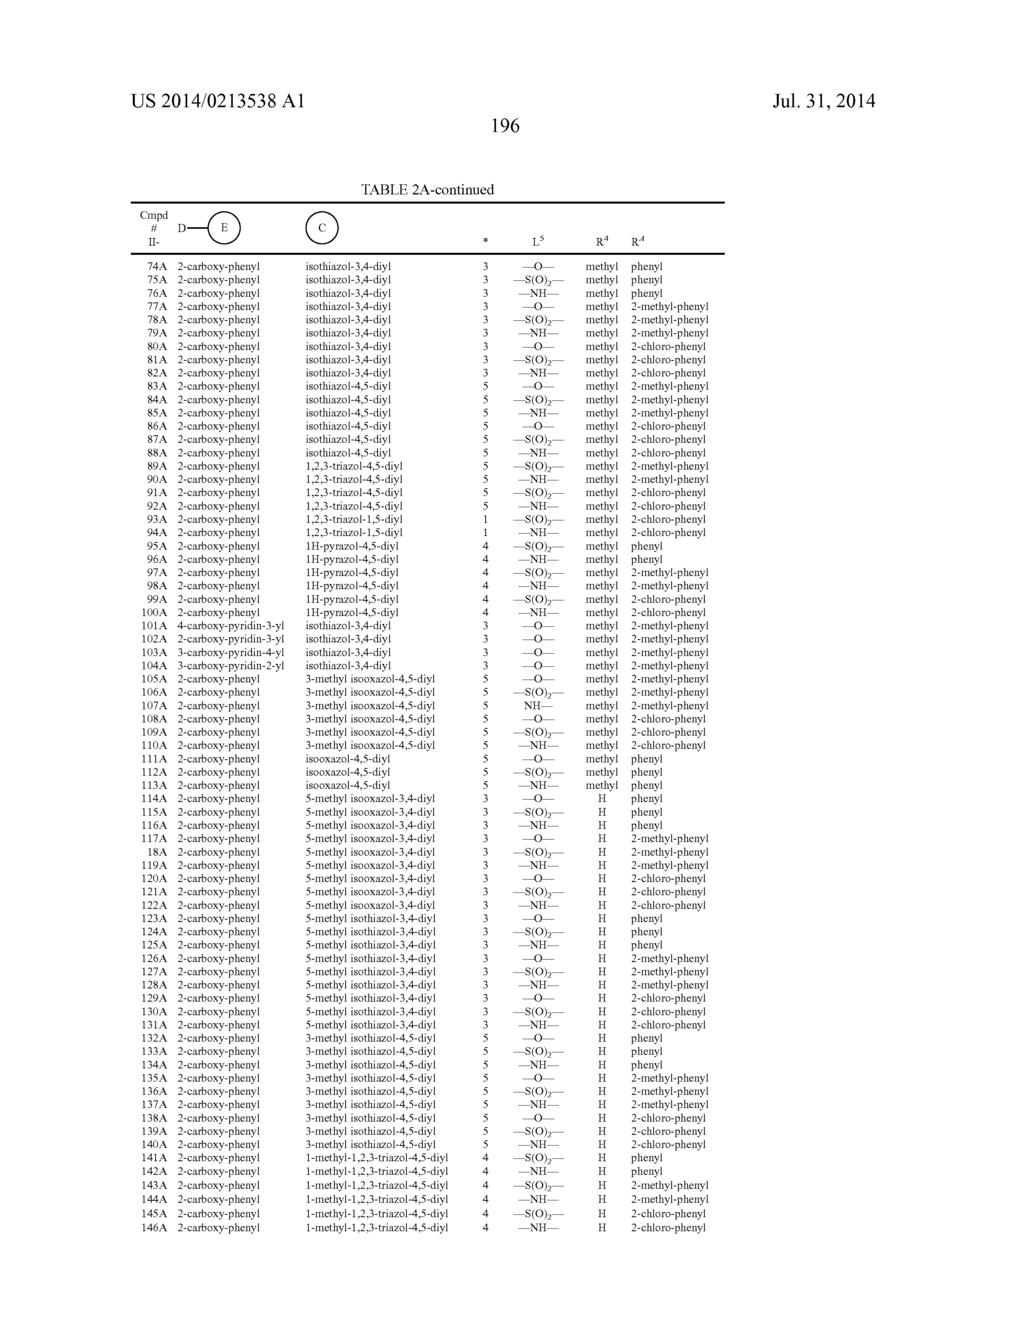 LYSOPHOSPHATIDIC ACID RECEPTOR ANTAGONISTS - diagram, schematic, and image 197